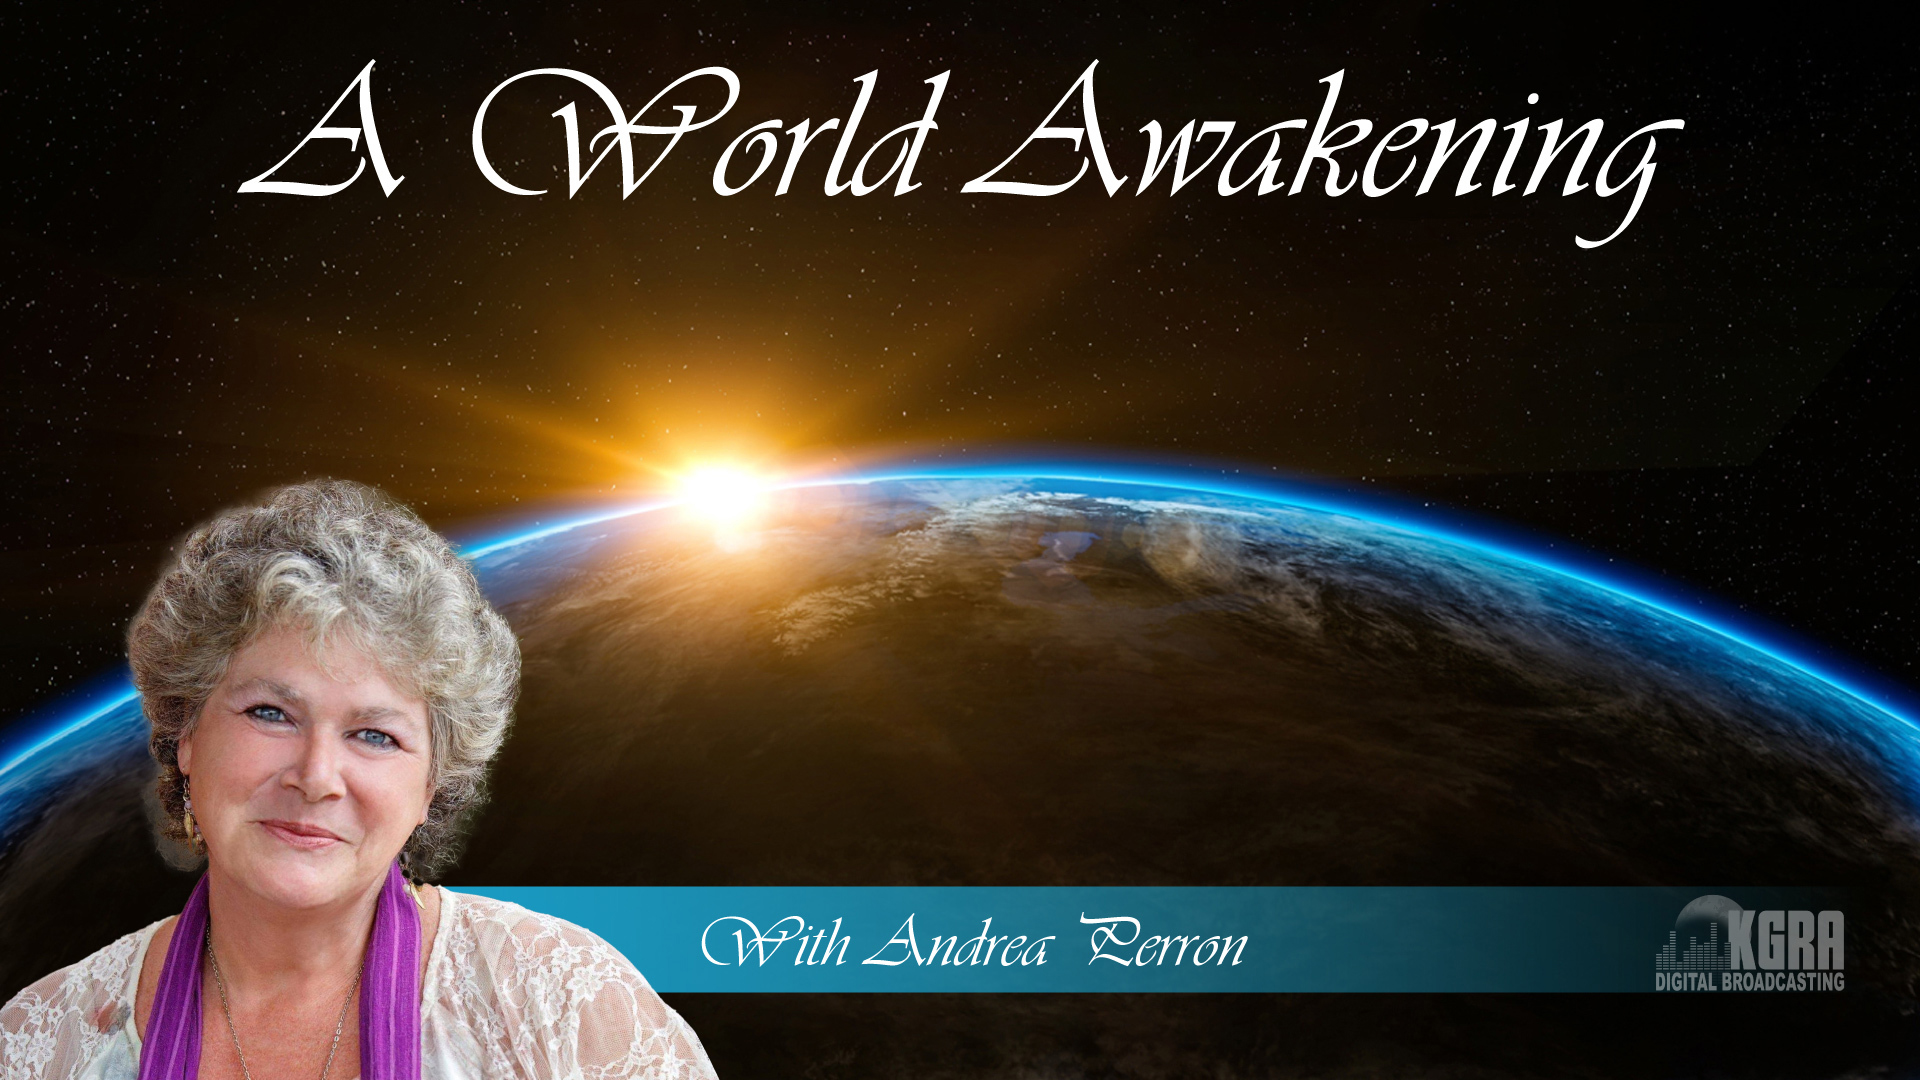 A World Awaking - Andrea Perron